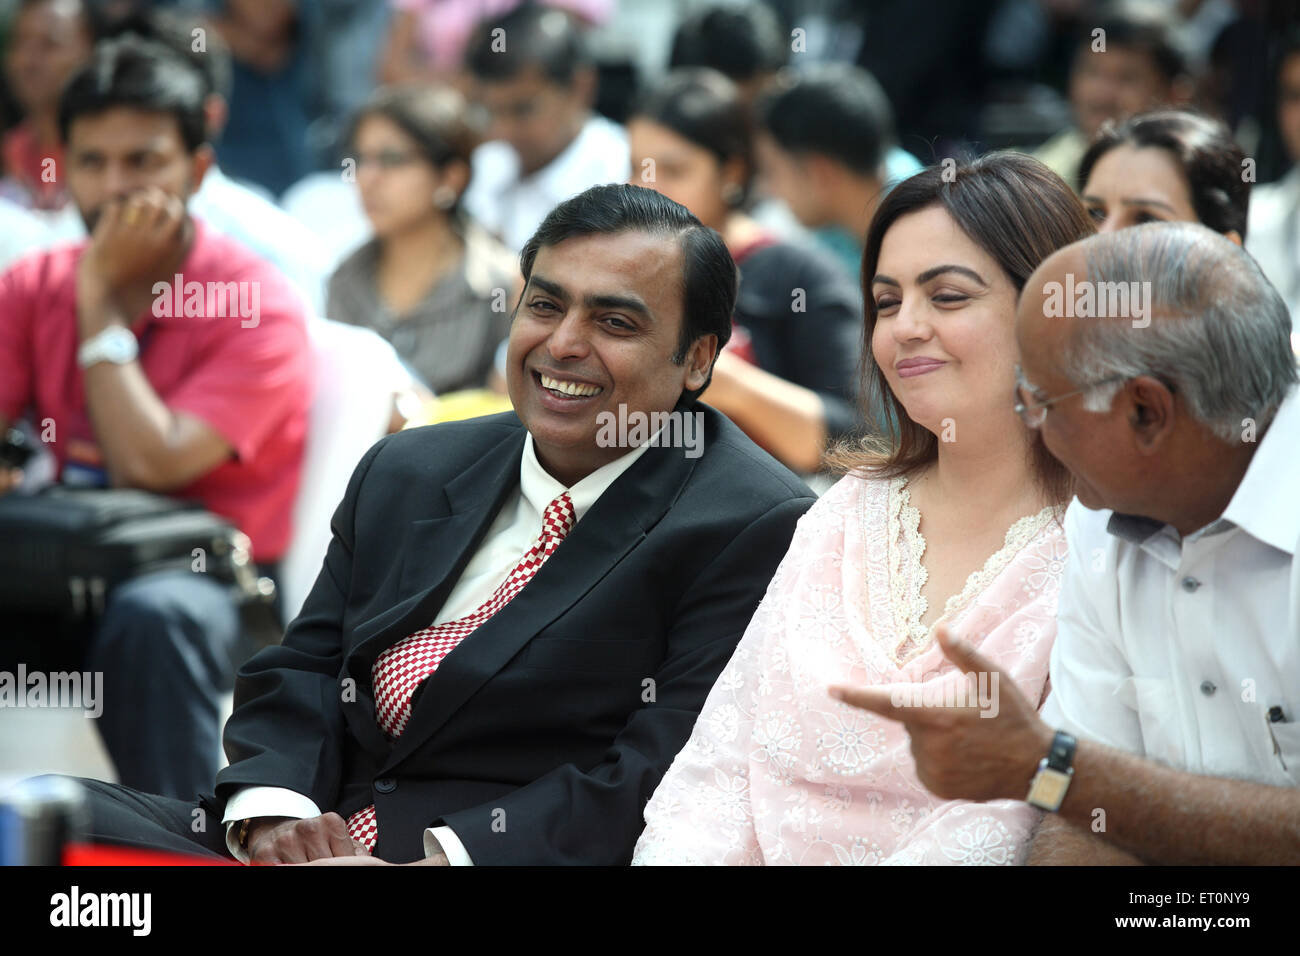 Presidente e amministratore delegato di Reliance Industries Mukesh Ambani e Neeta Ambani NOMR Foto Stock